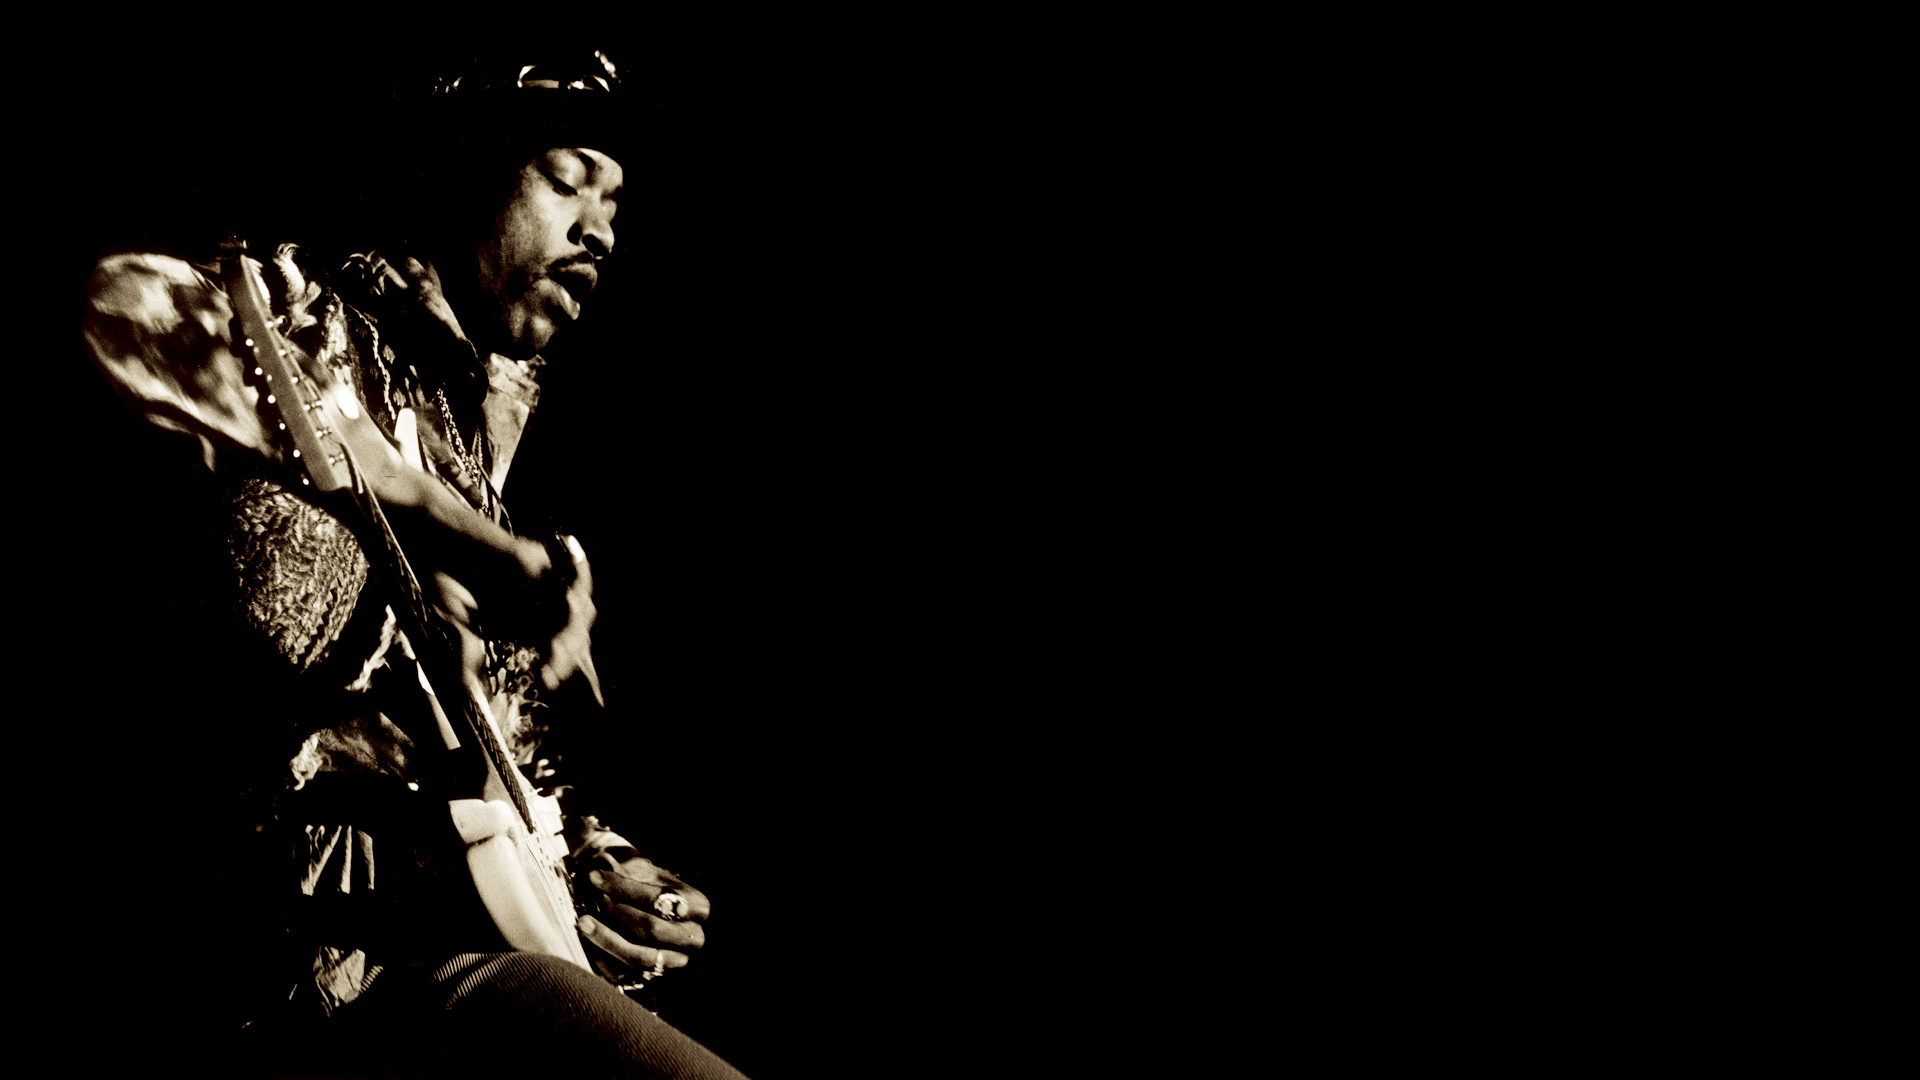 Jimi Hendrix Wallpaper High Resolution Mfu38wz 4usky